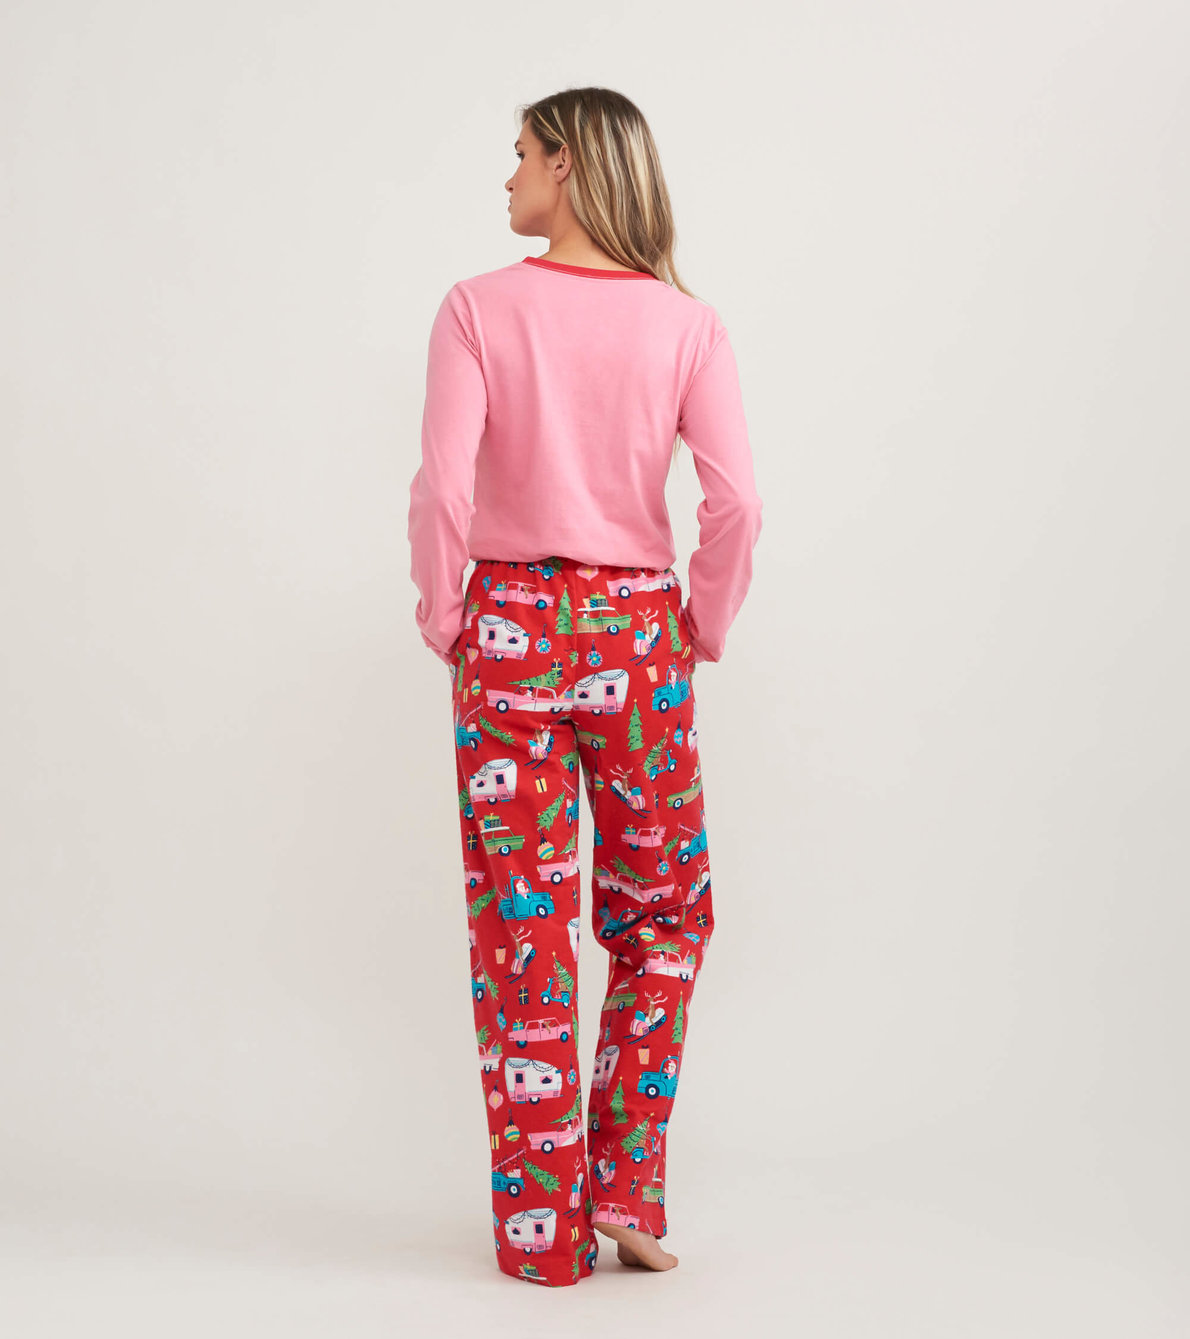 View larger image of Noel Women's Long Sleeve Pajama Tee